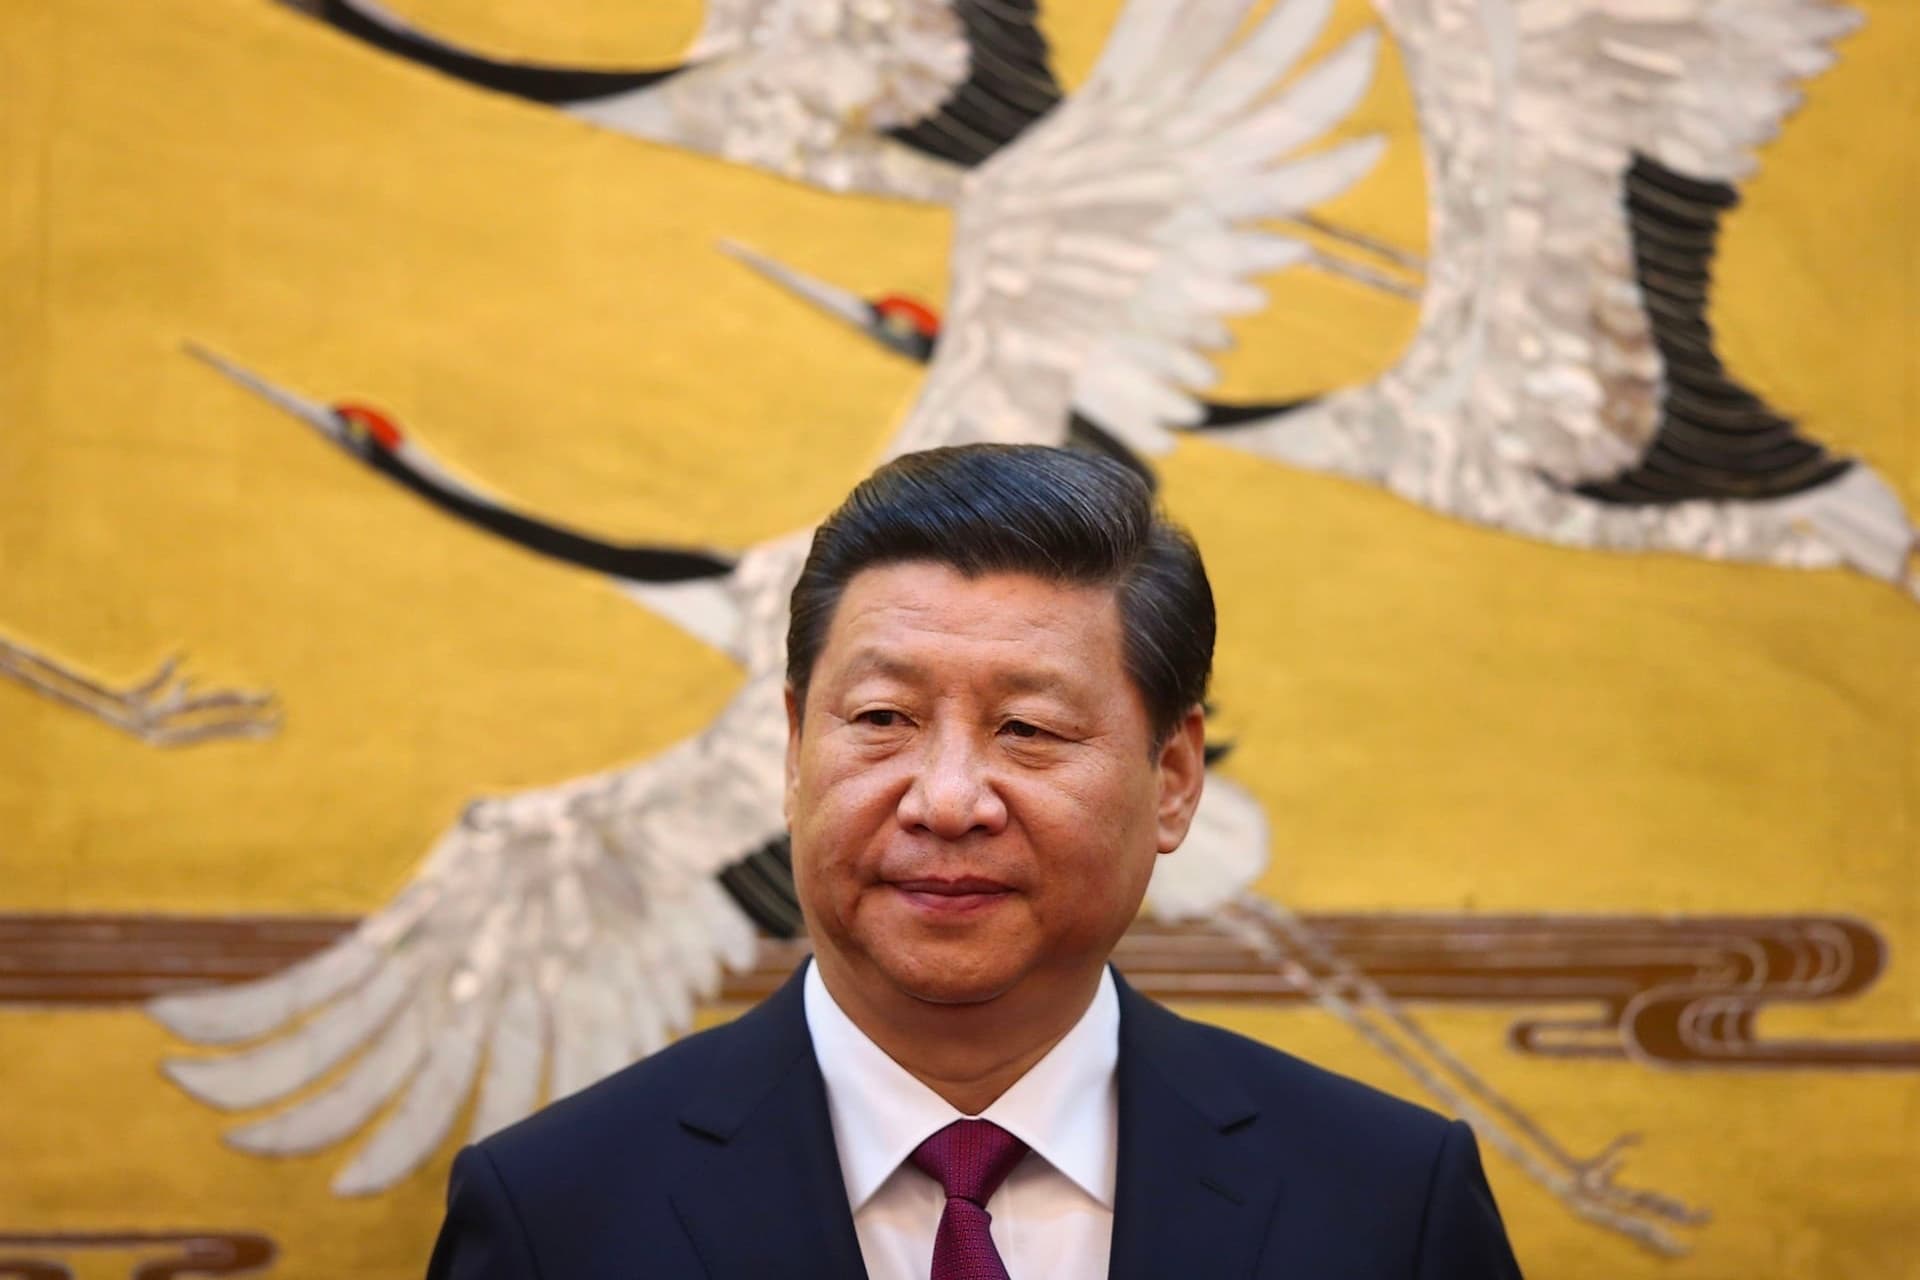 xi jinping china president suit face 6406e7de493bdeb4ddc84ad7